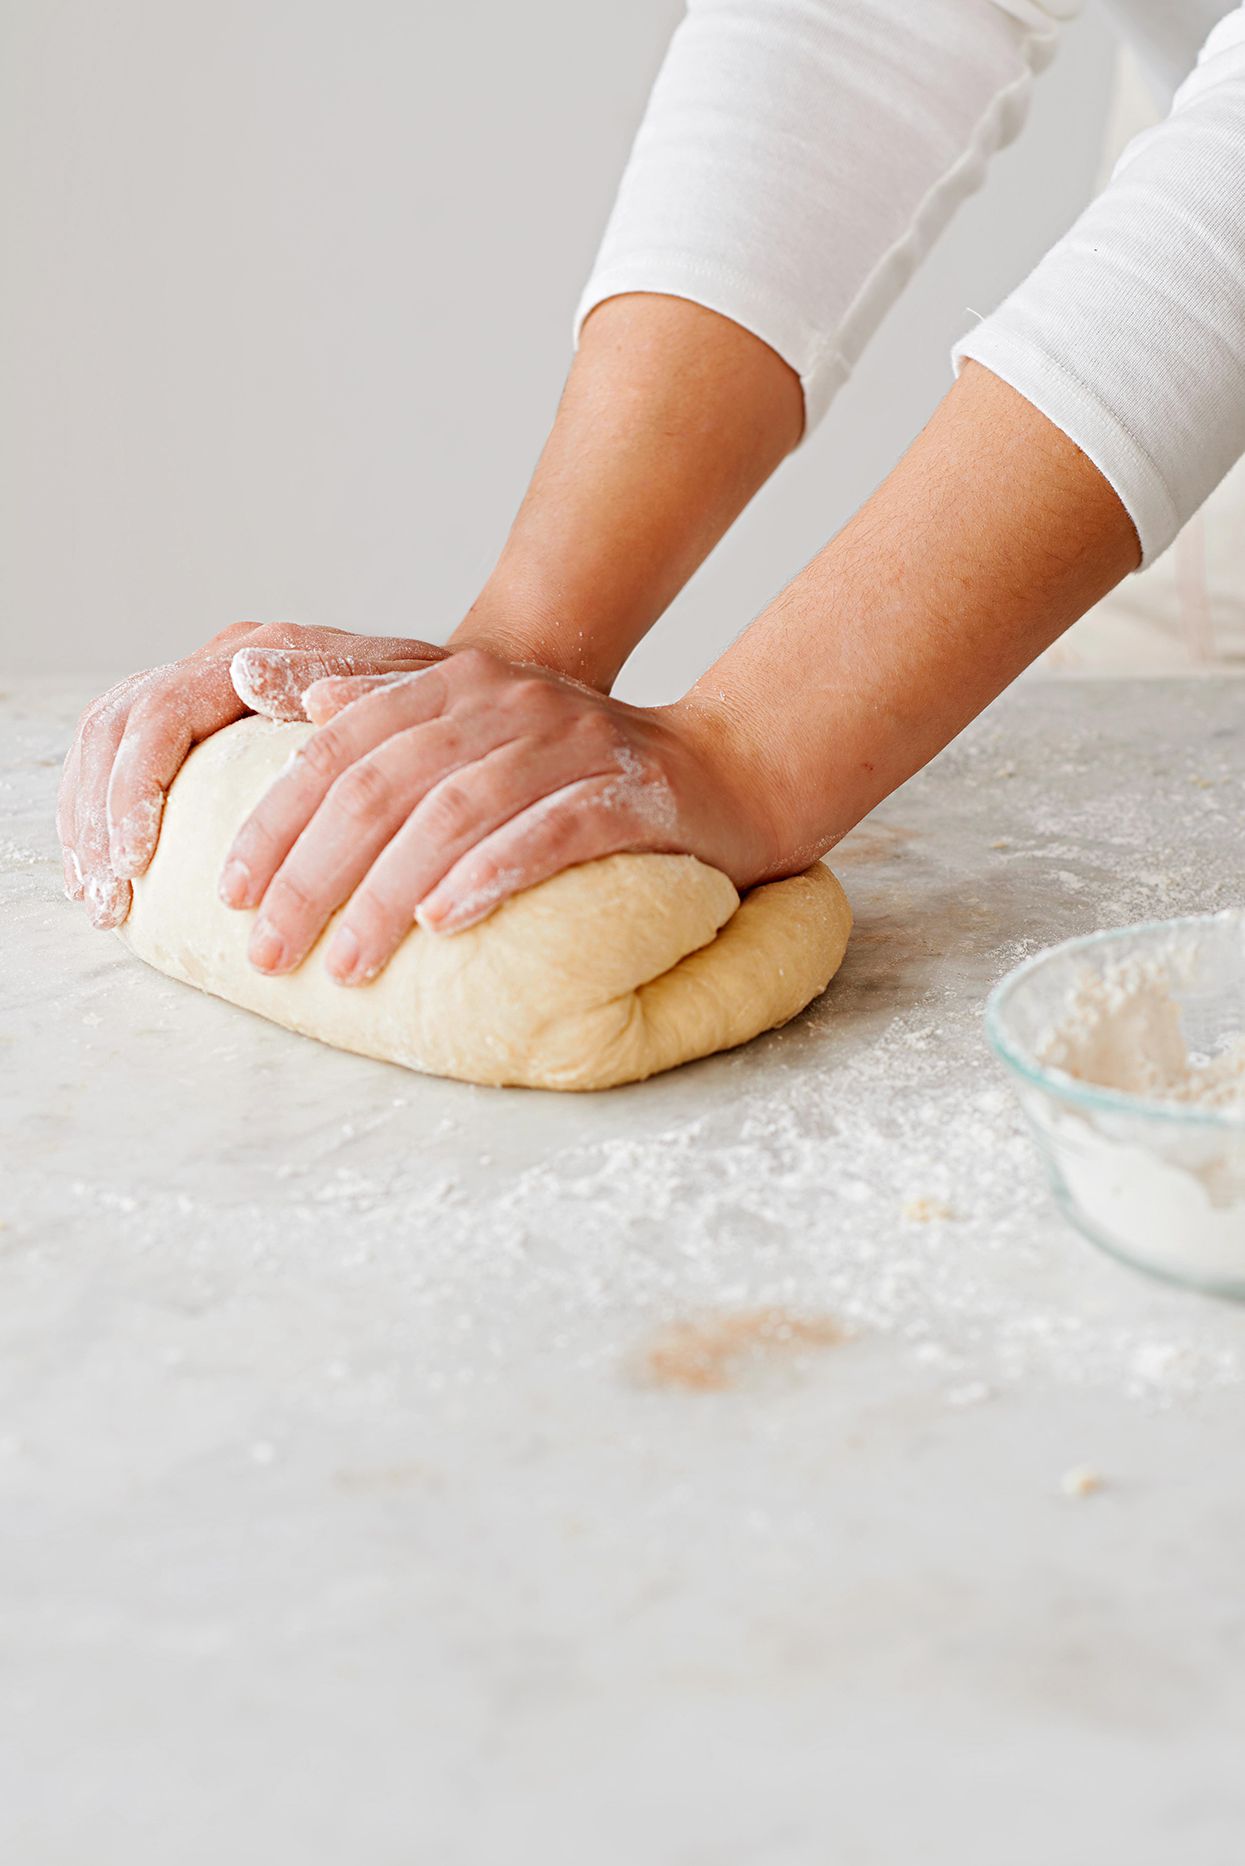 Kneading dough for cinnamon rolls